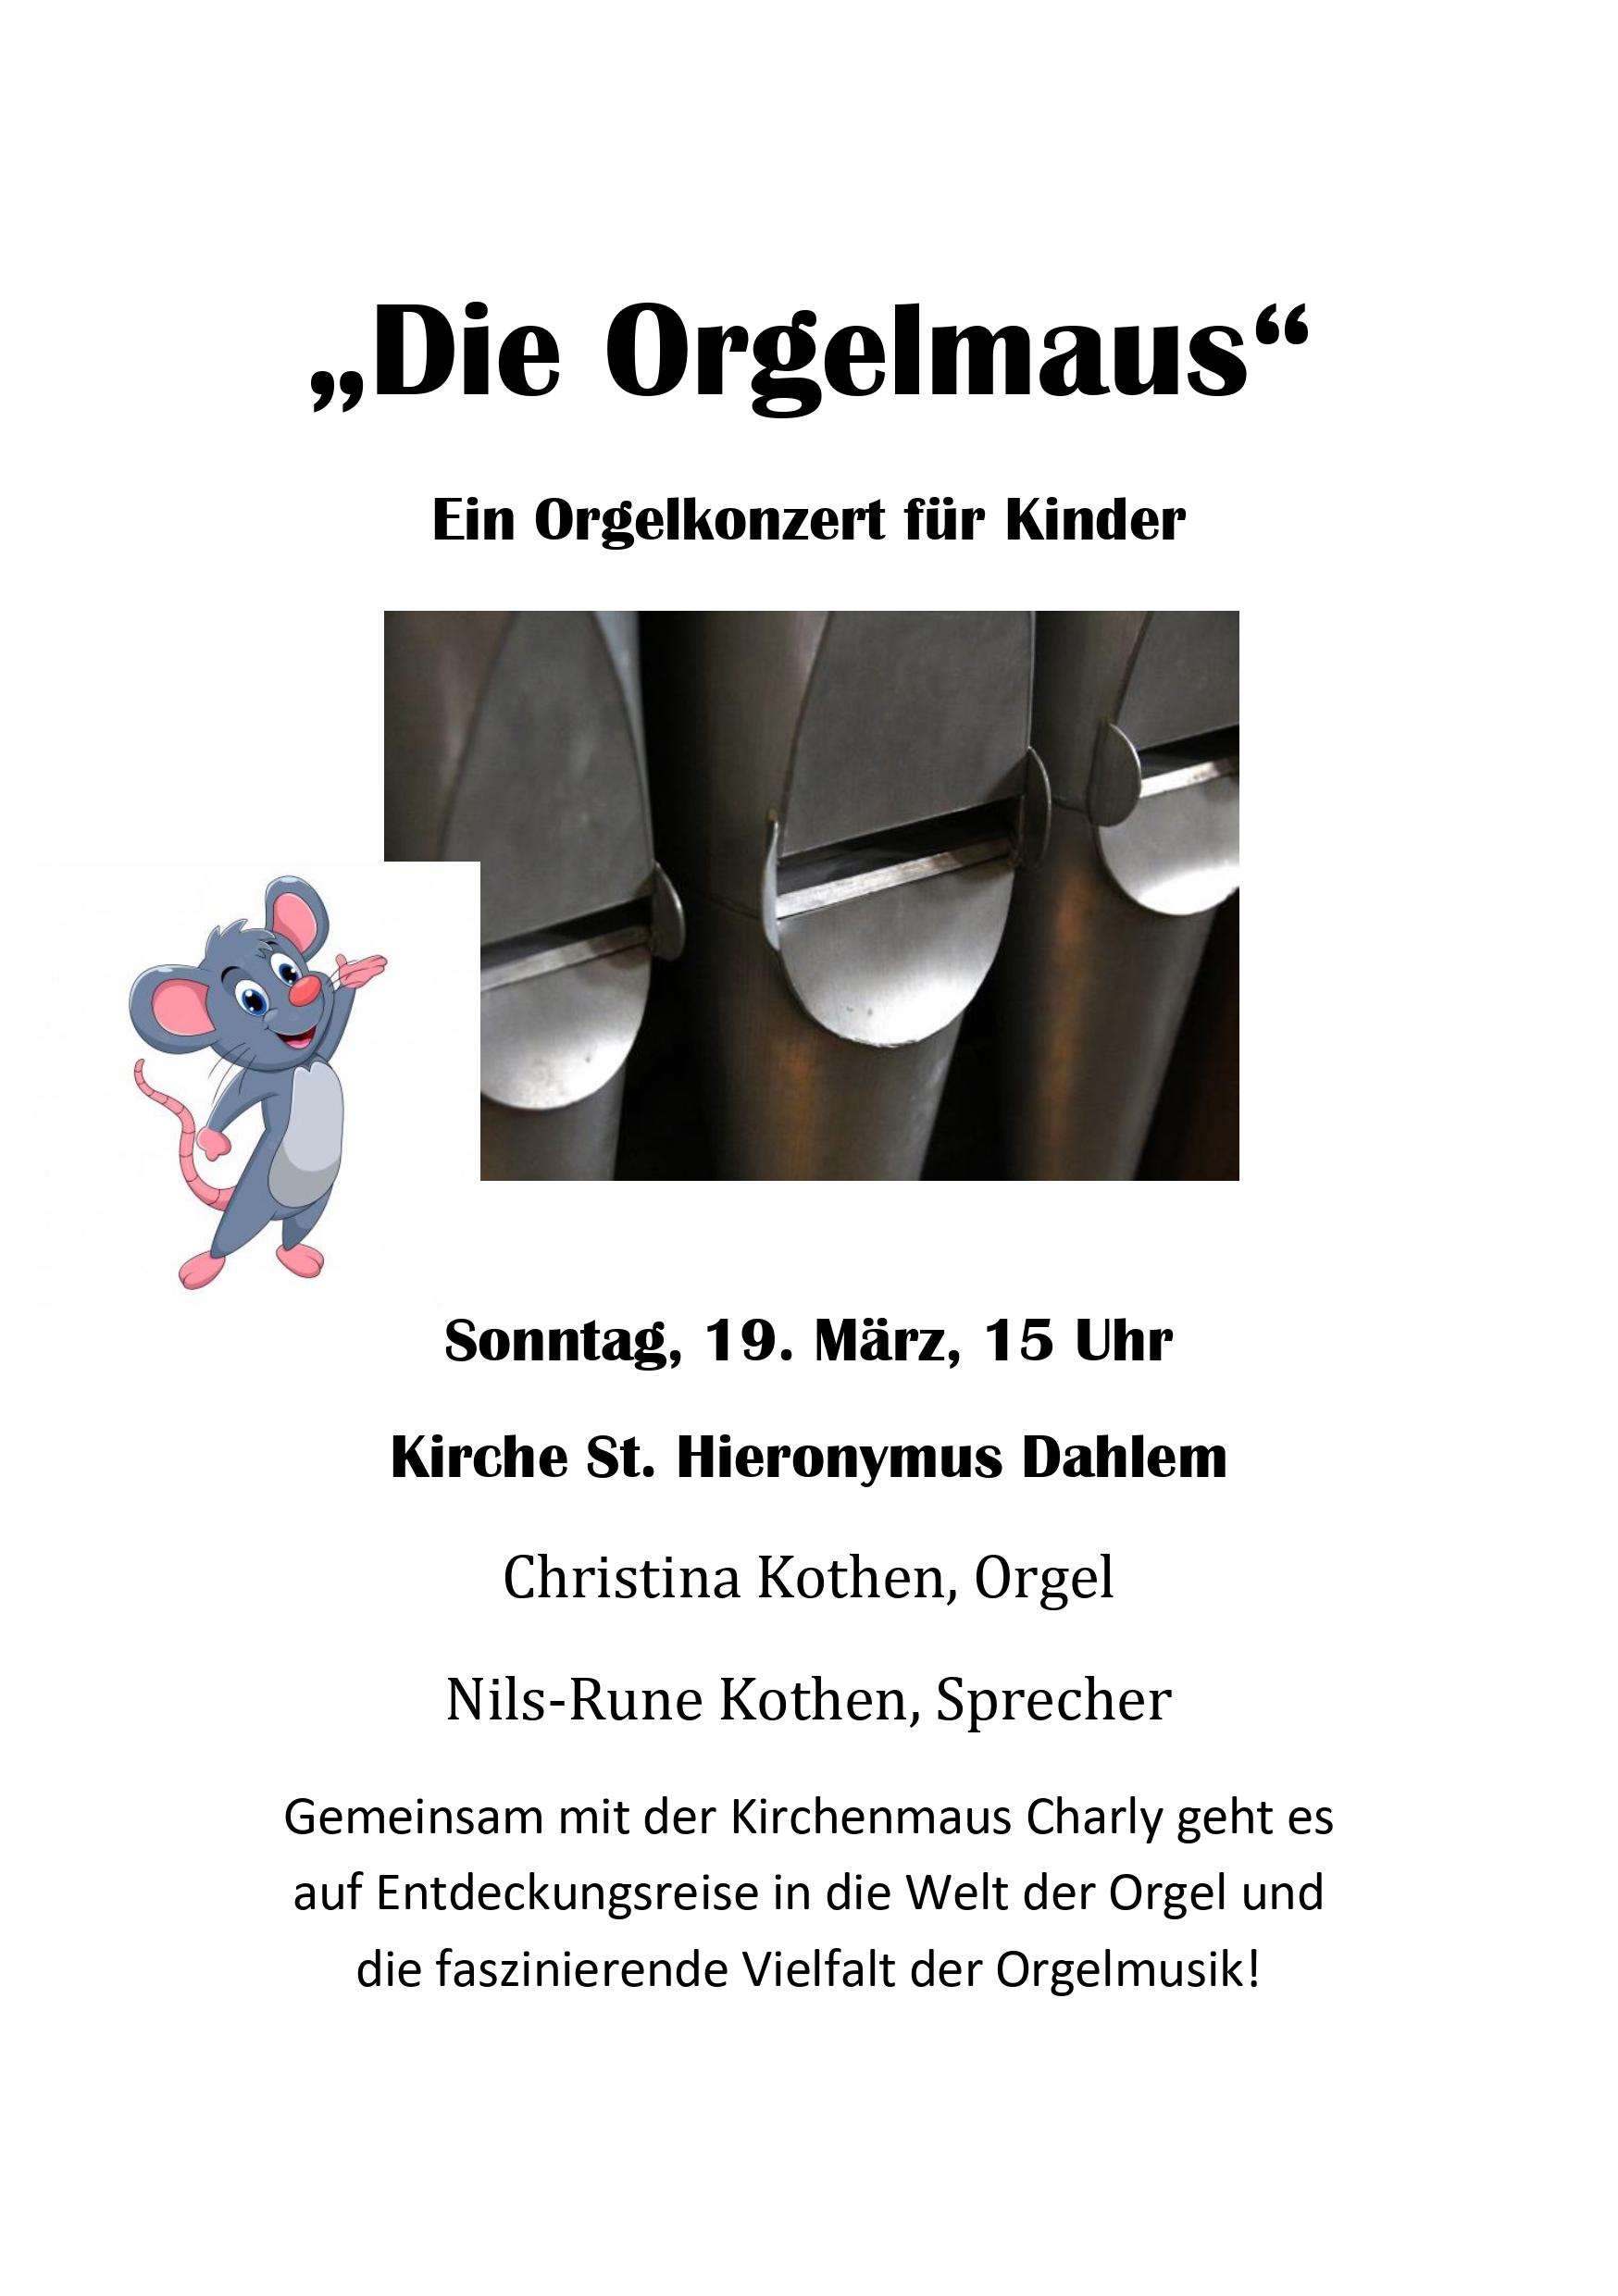 Die Orgelmaus (c) GdG Blankenheim / Dahlem